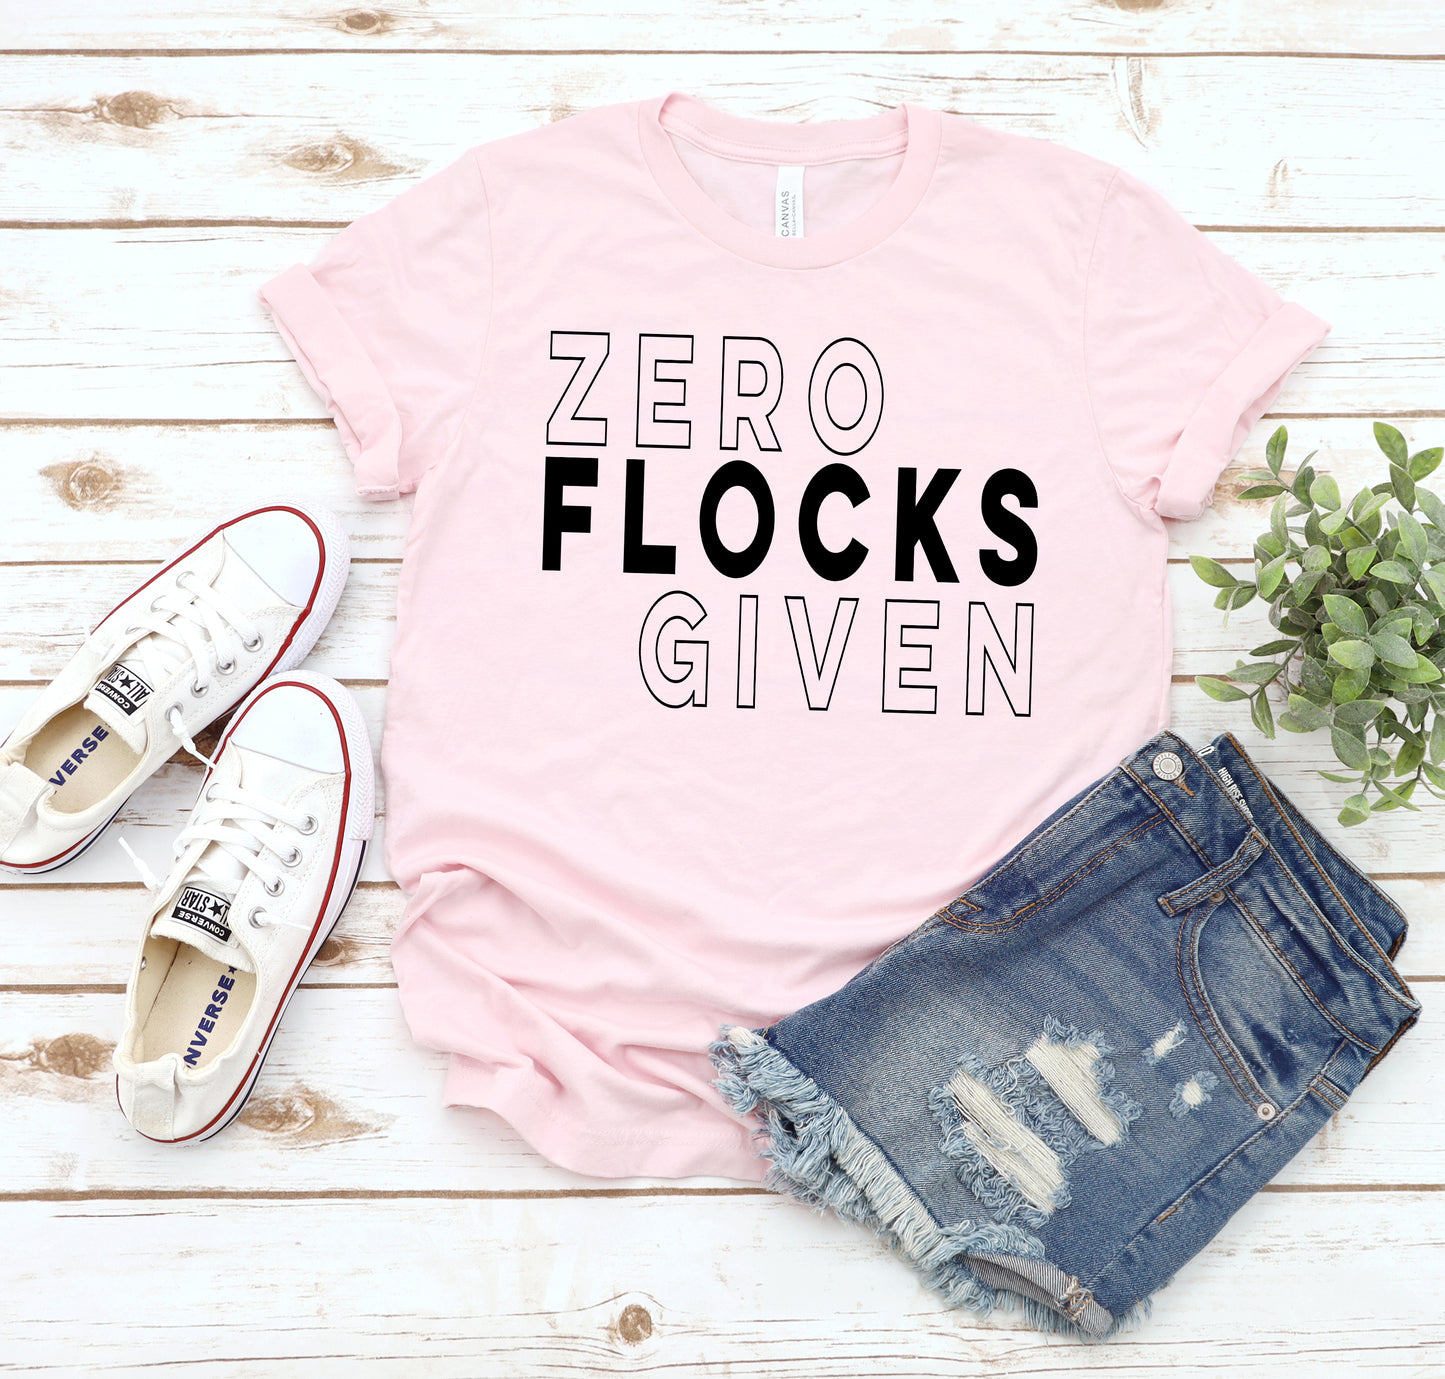 Zero flocks given